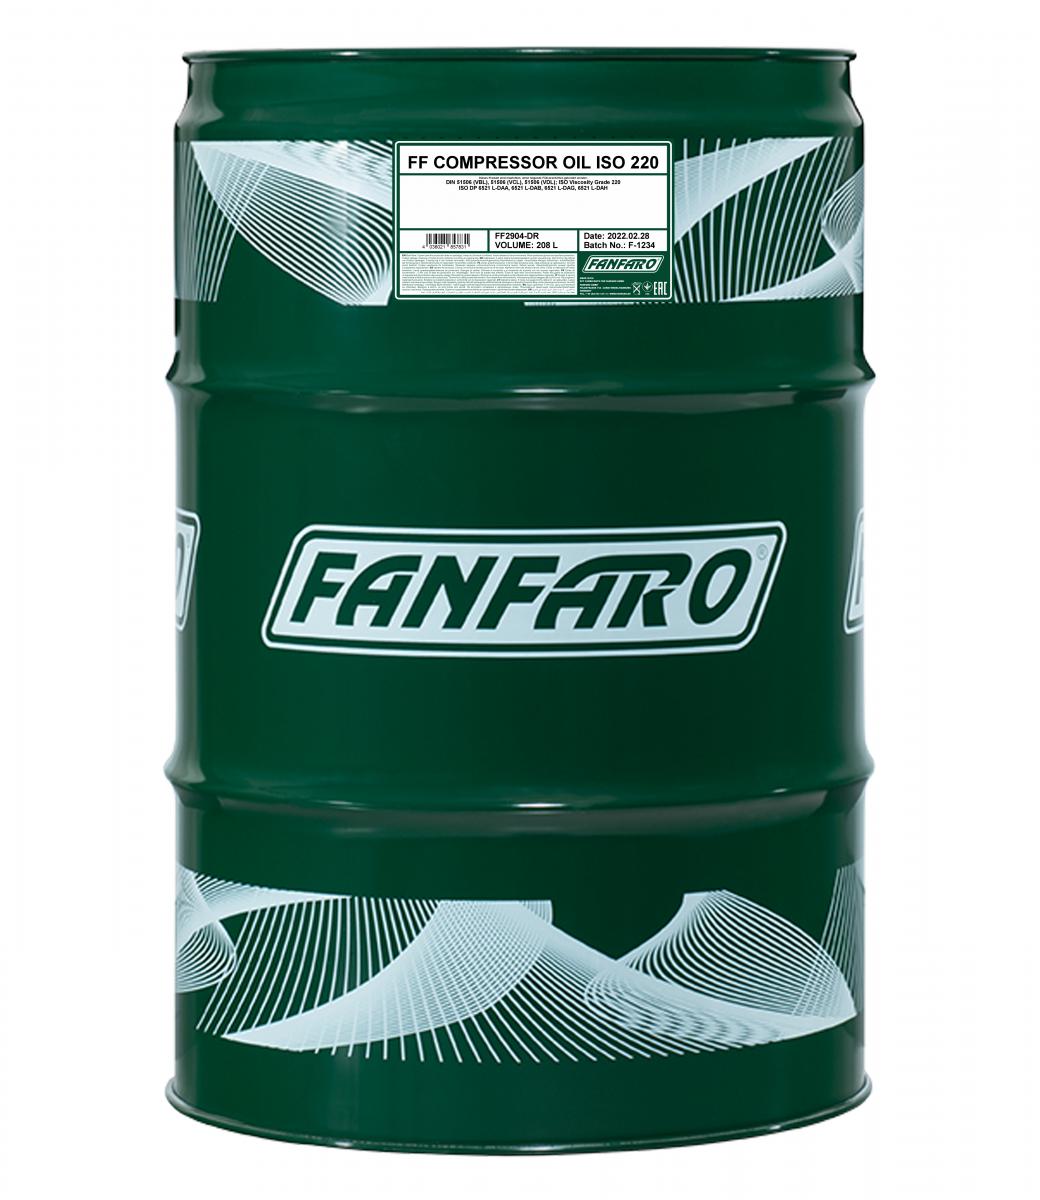 FANFARO COMRESSOR OIL ISO 220